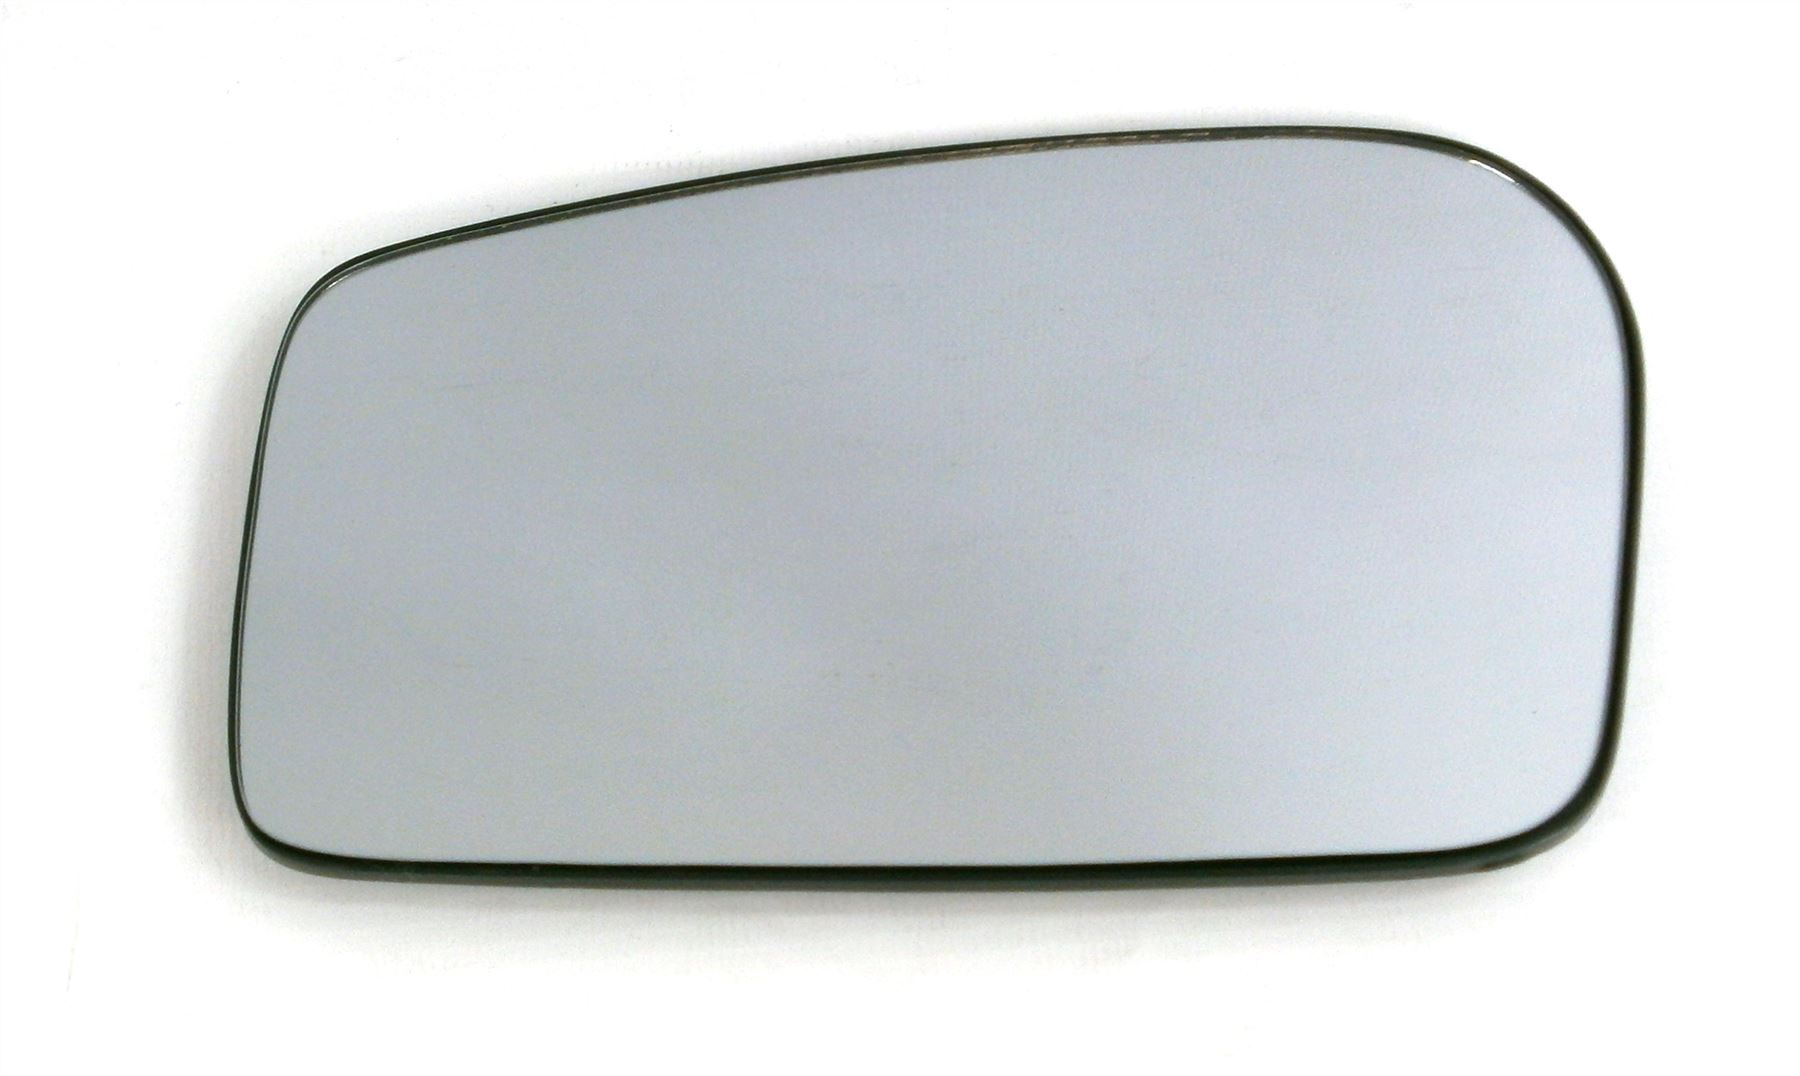 Fiat Ulysse Mk.1 1995-2002 Non-Heated Convex Chrome Mirror Glass Passengers Side N/S